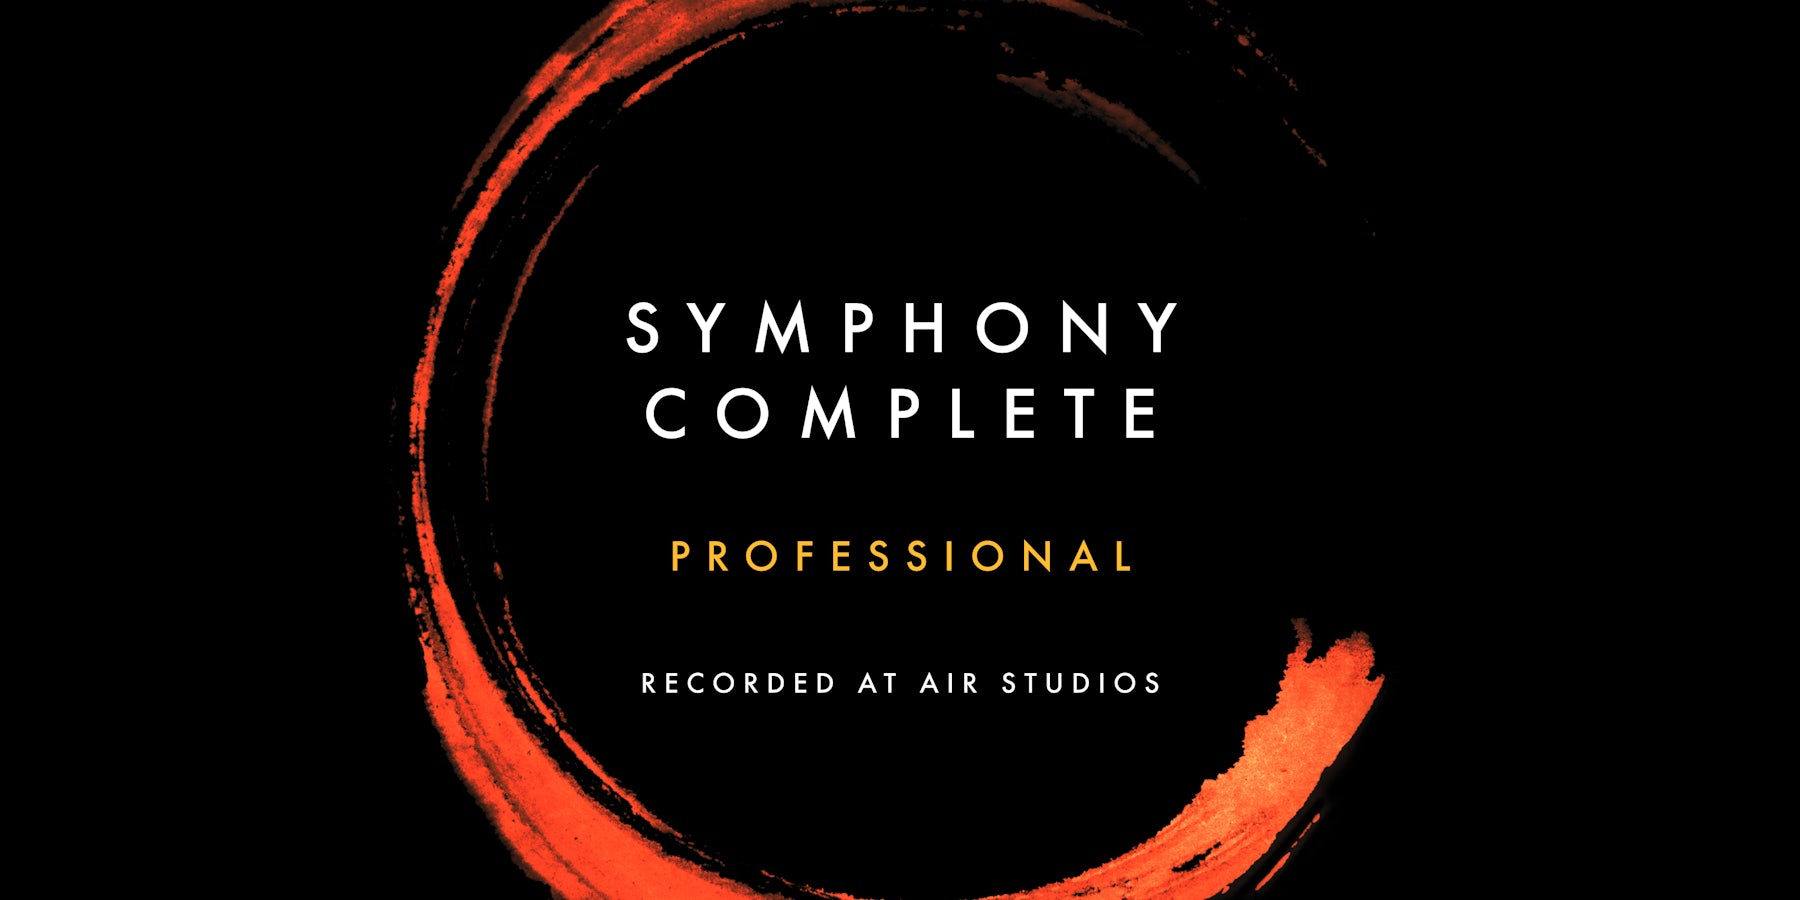 Symphony Complete Professional cinemascope